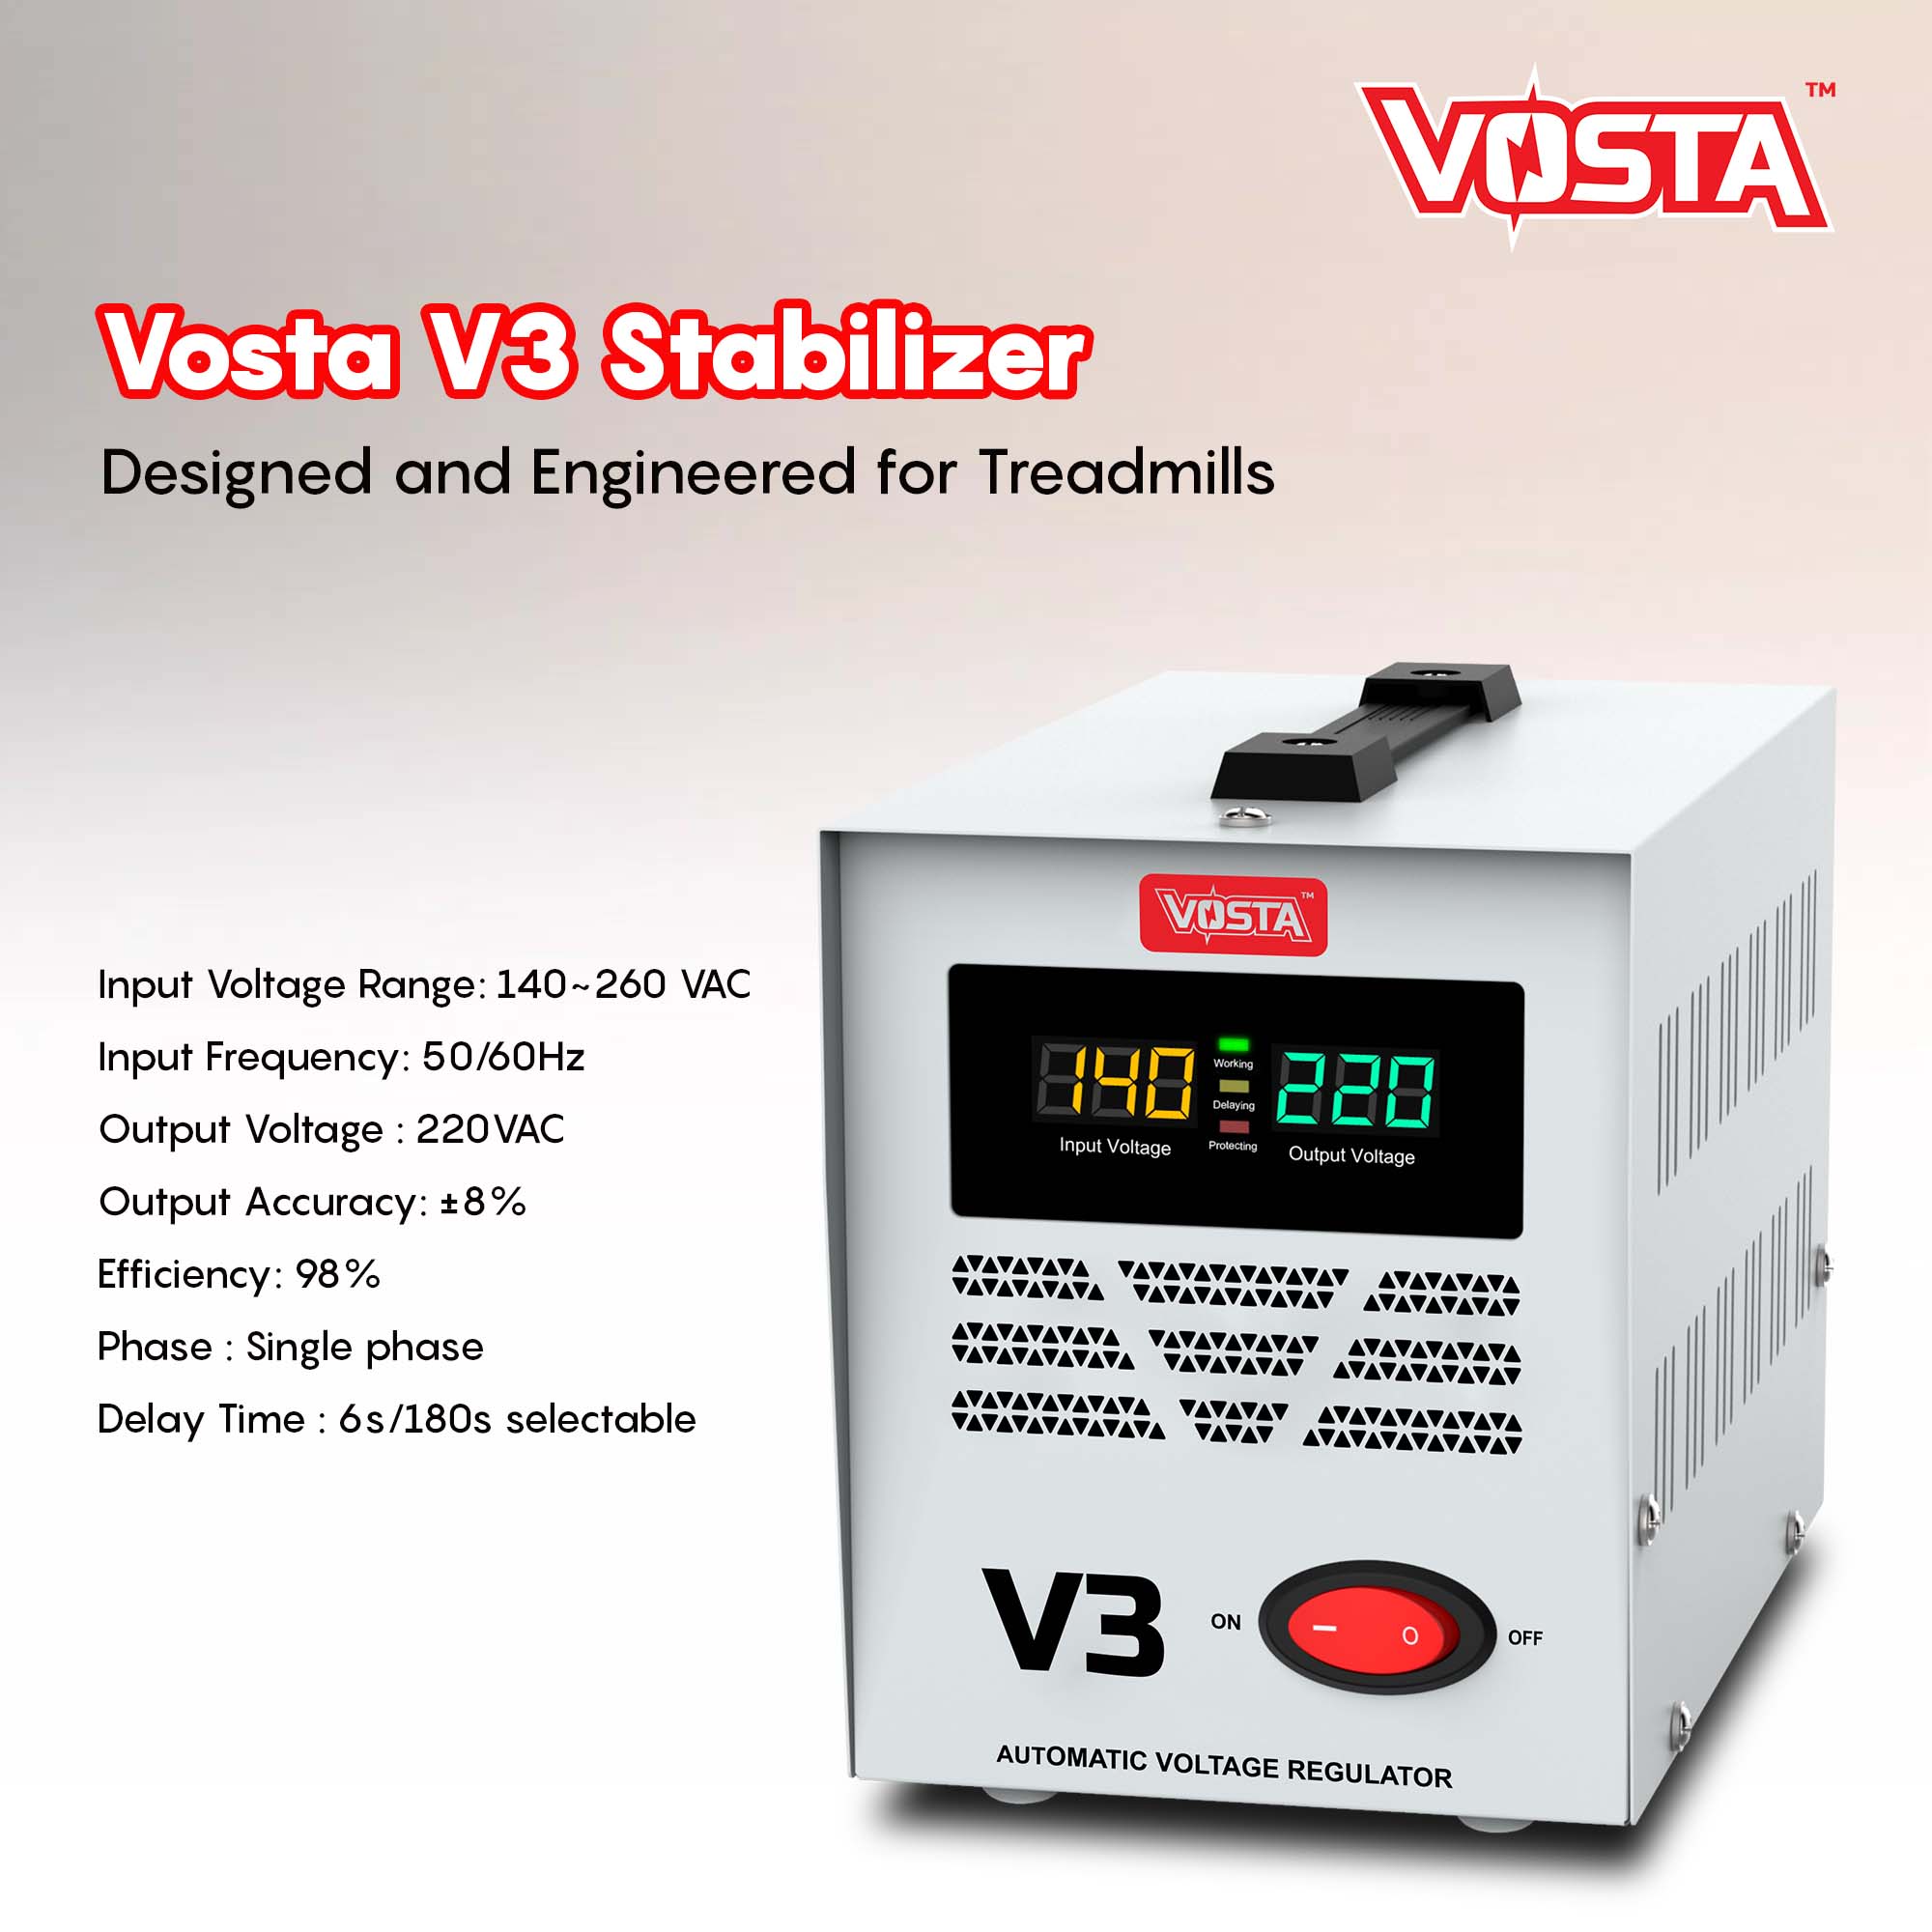 Vosta V3 Stabilizer